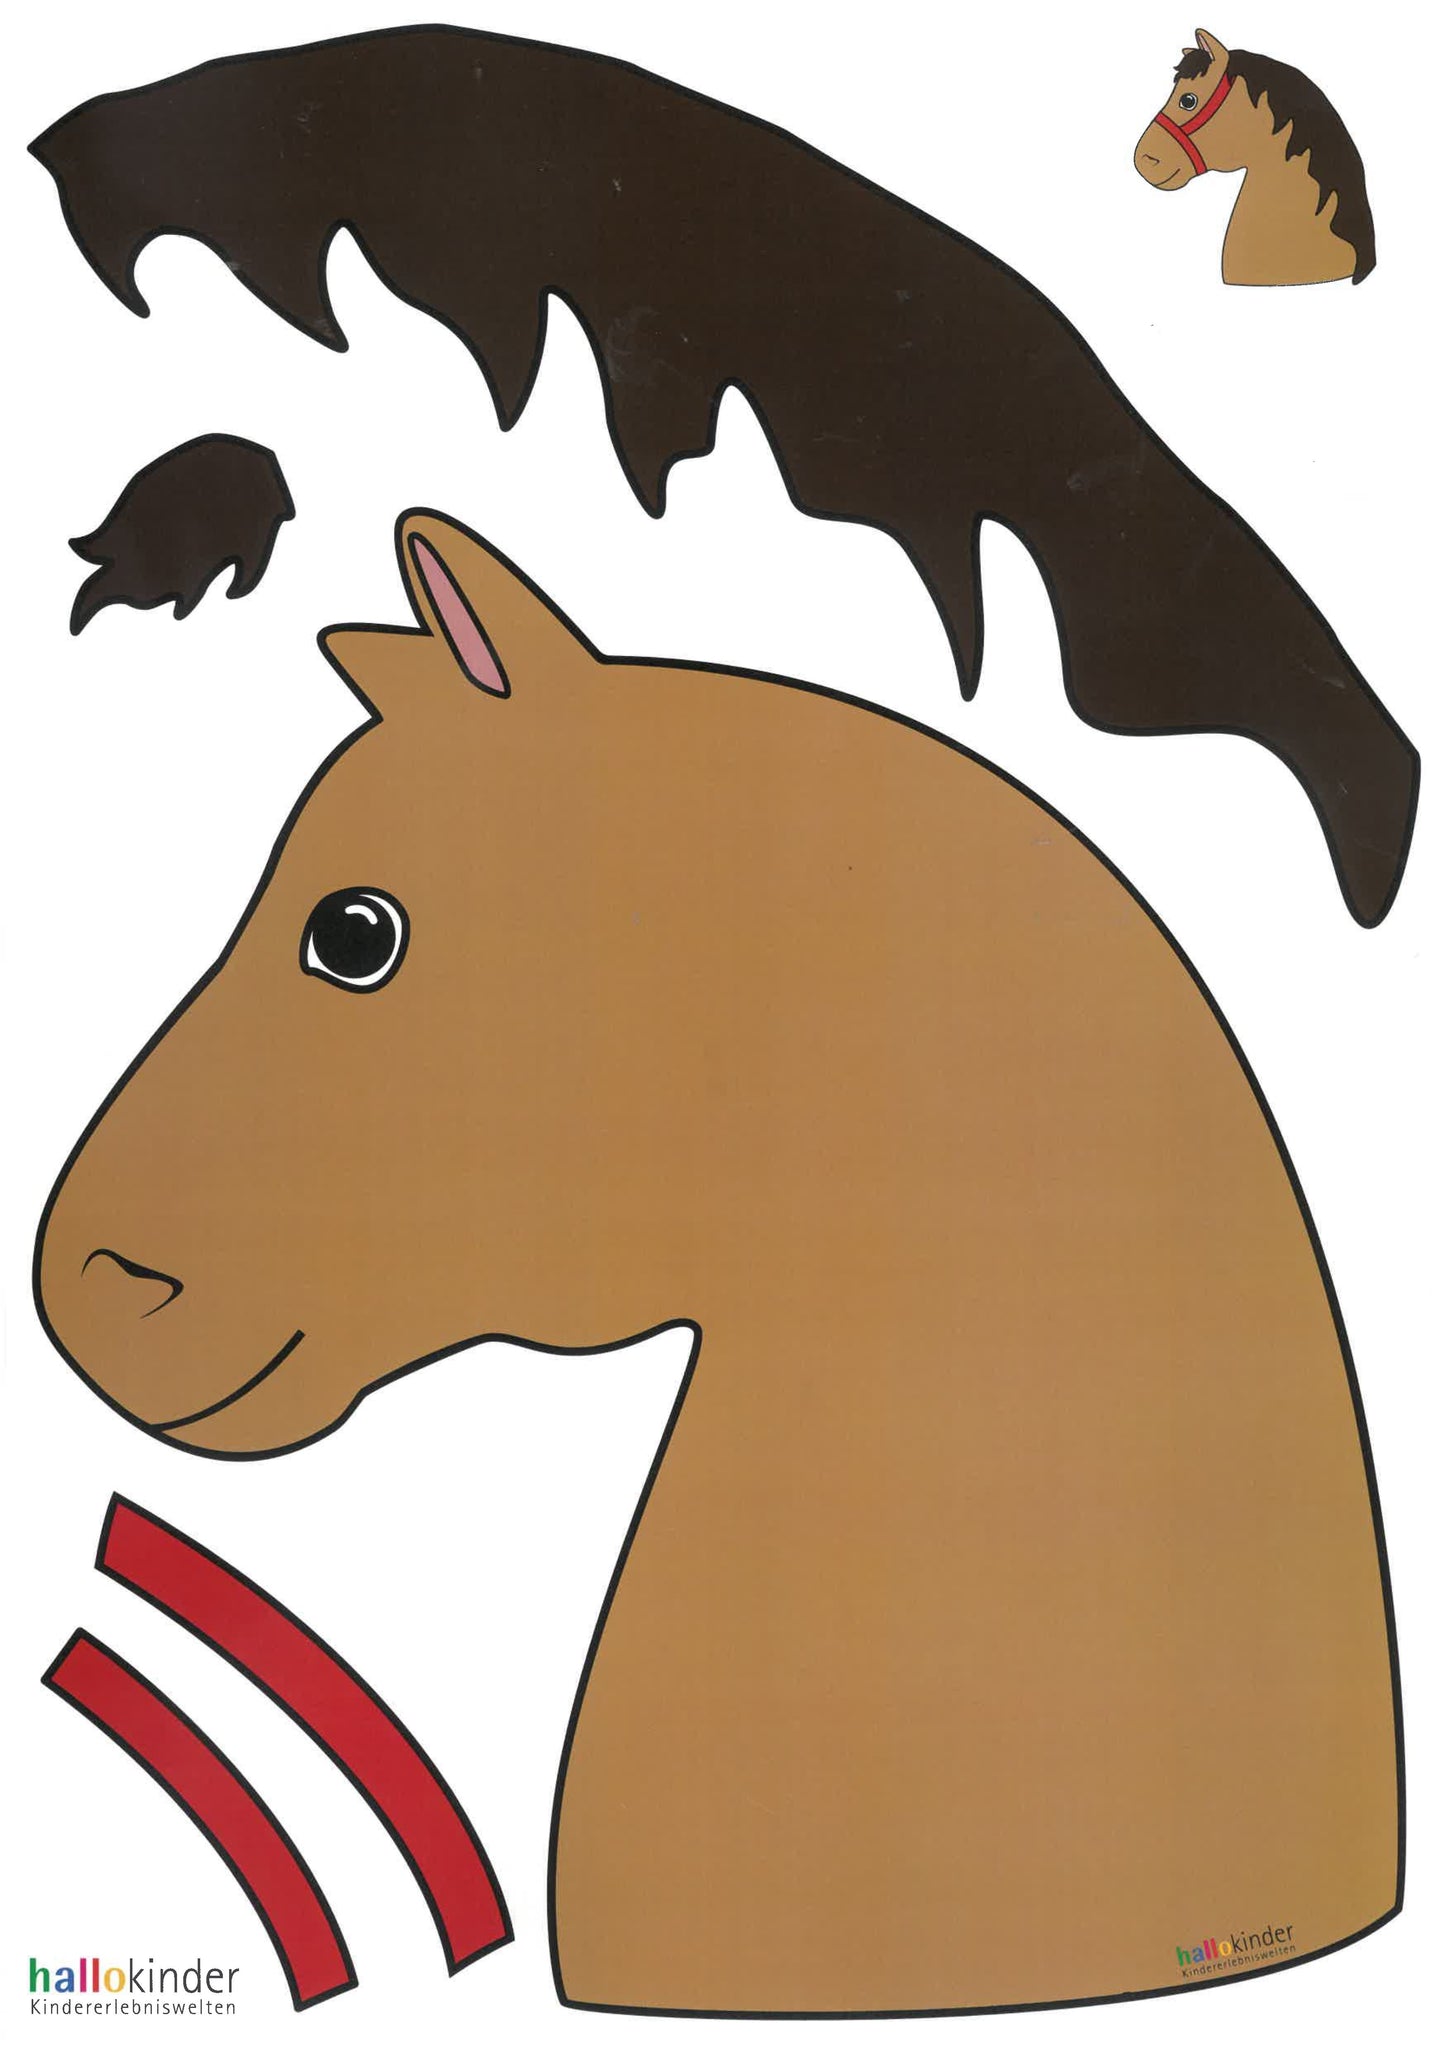 Pferd / Steckenpferd "Brownie das Kräftige" - hallokindershop